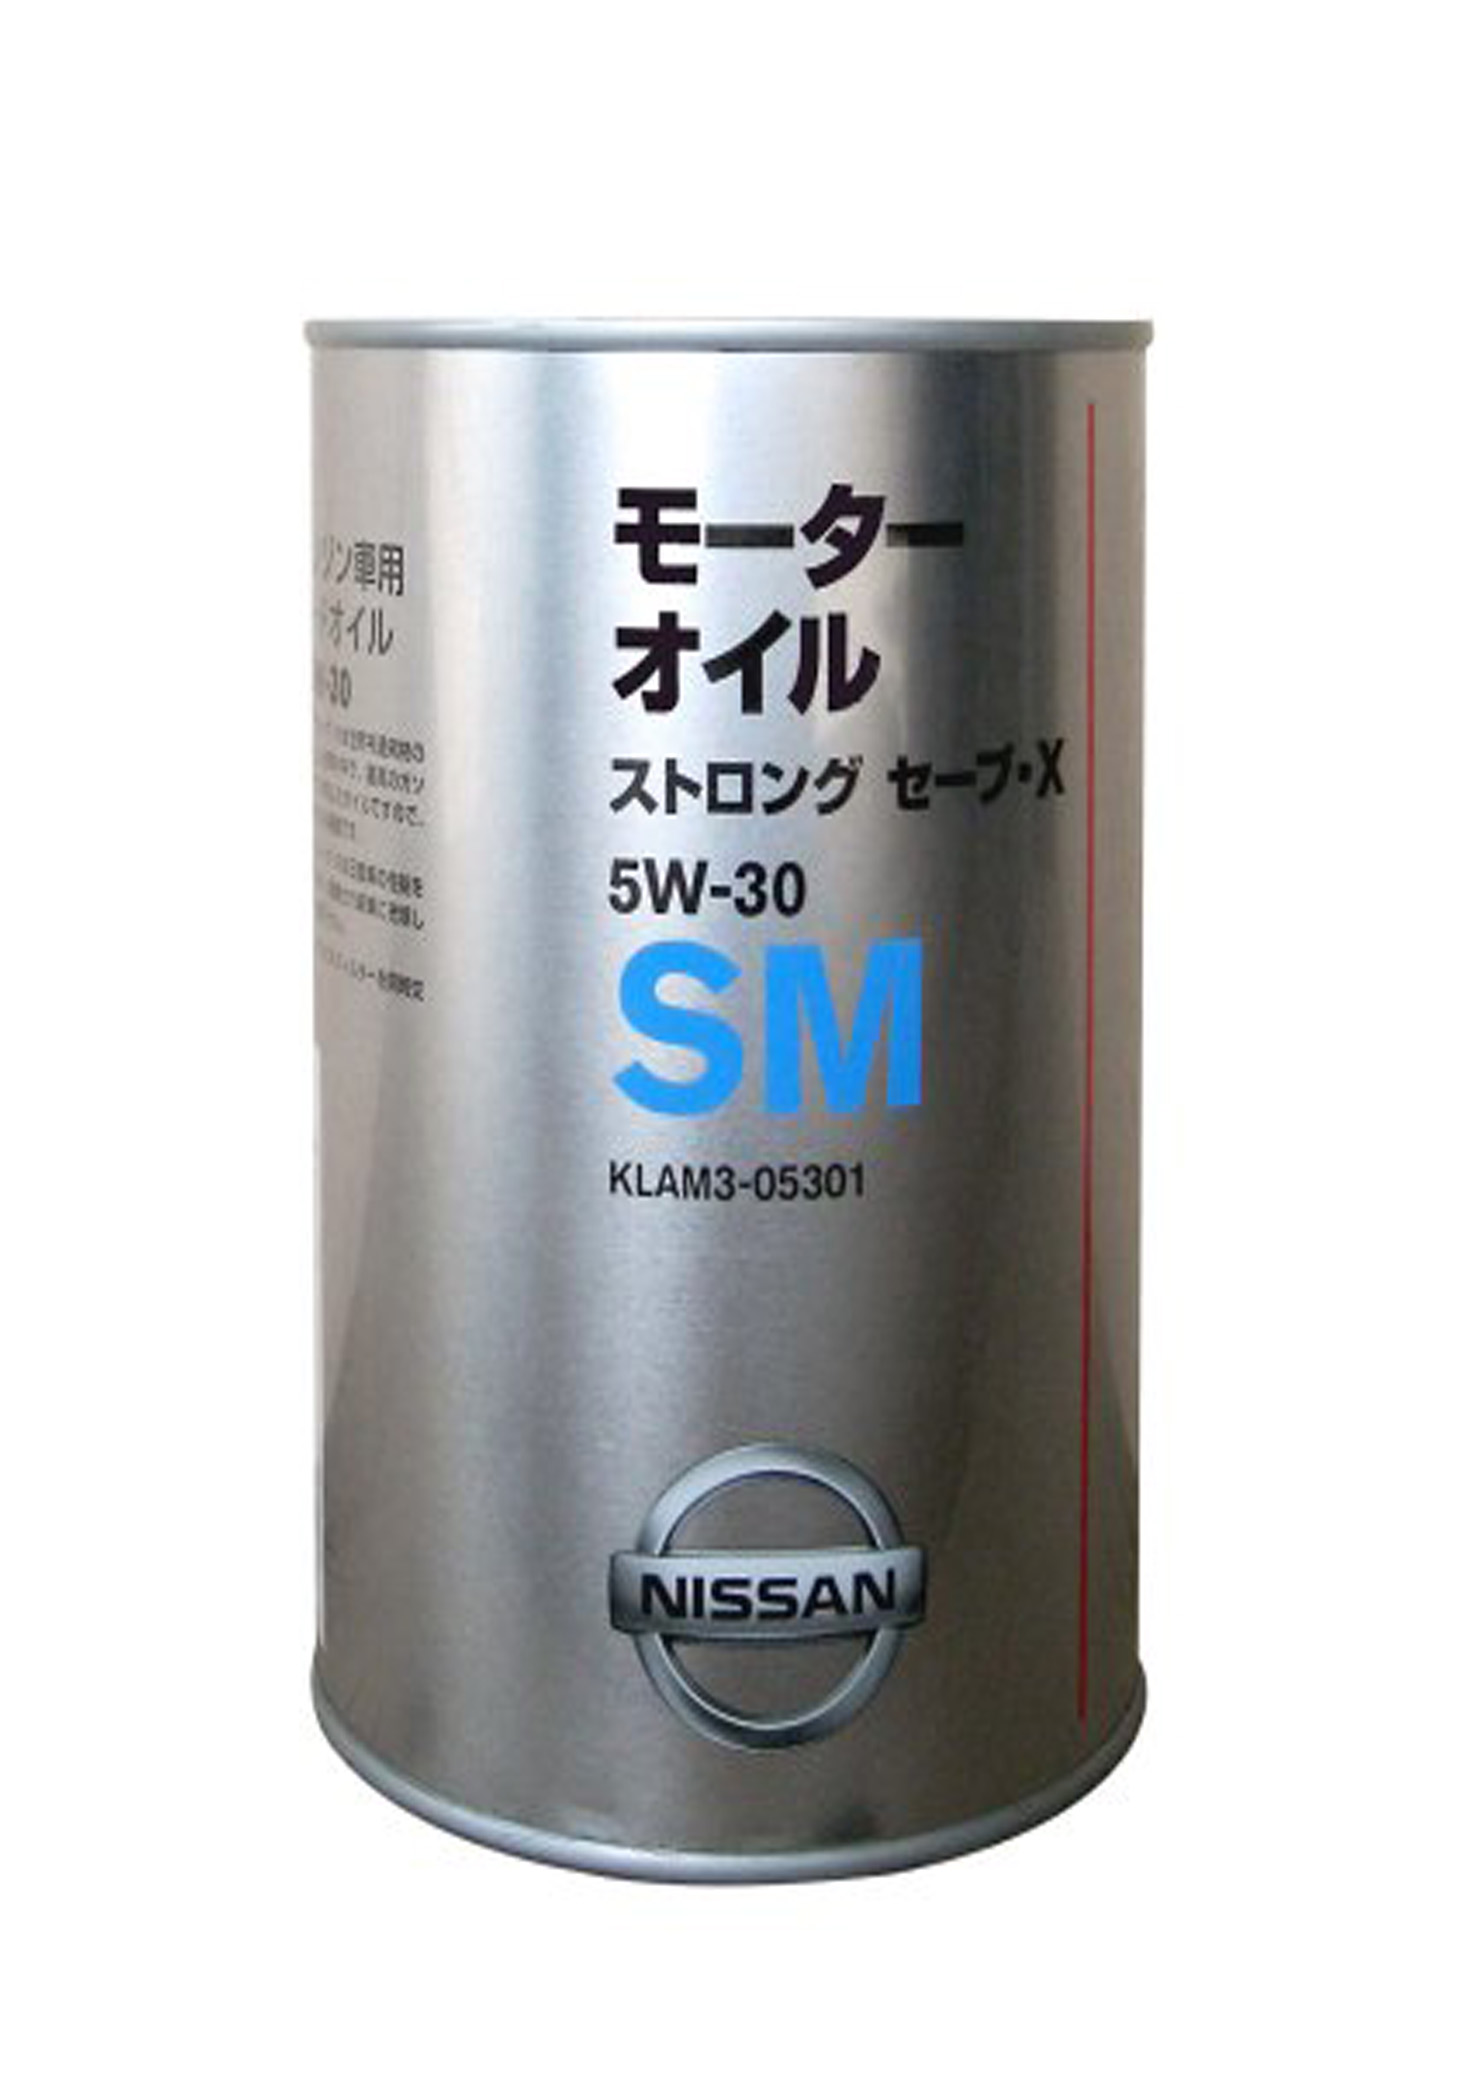 Характеристики масла ниссан. Nissan strong SM 5w-30. Nissan SN strong save x 5w-30. Klam3 05301. Nissan Япония strong save x 5w–30..